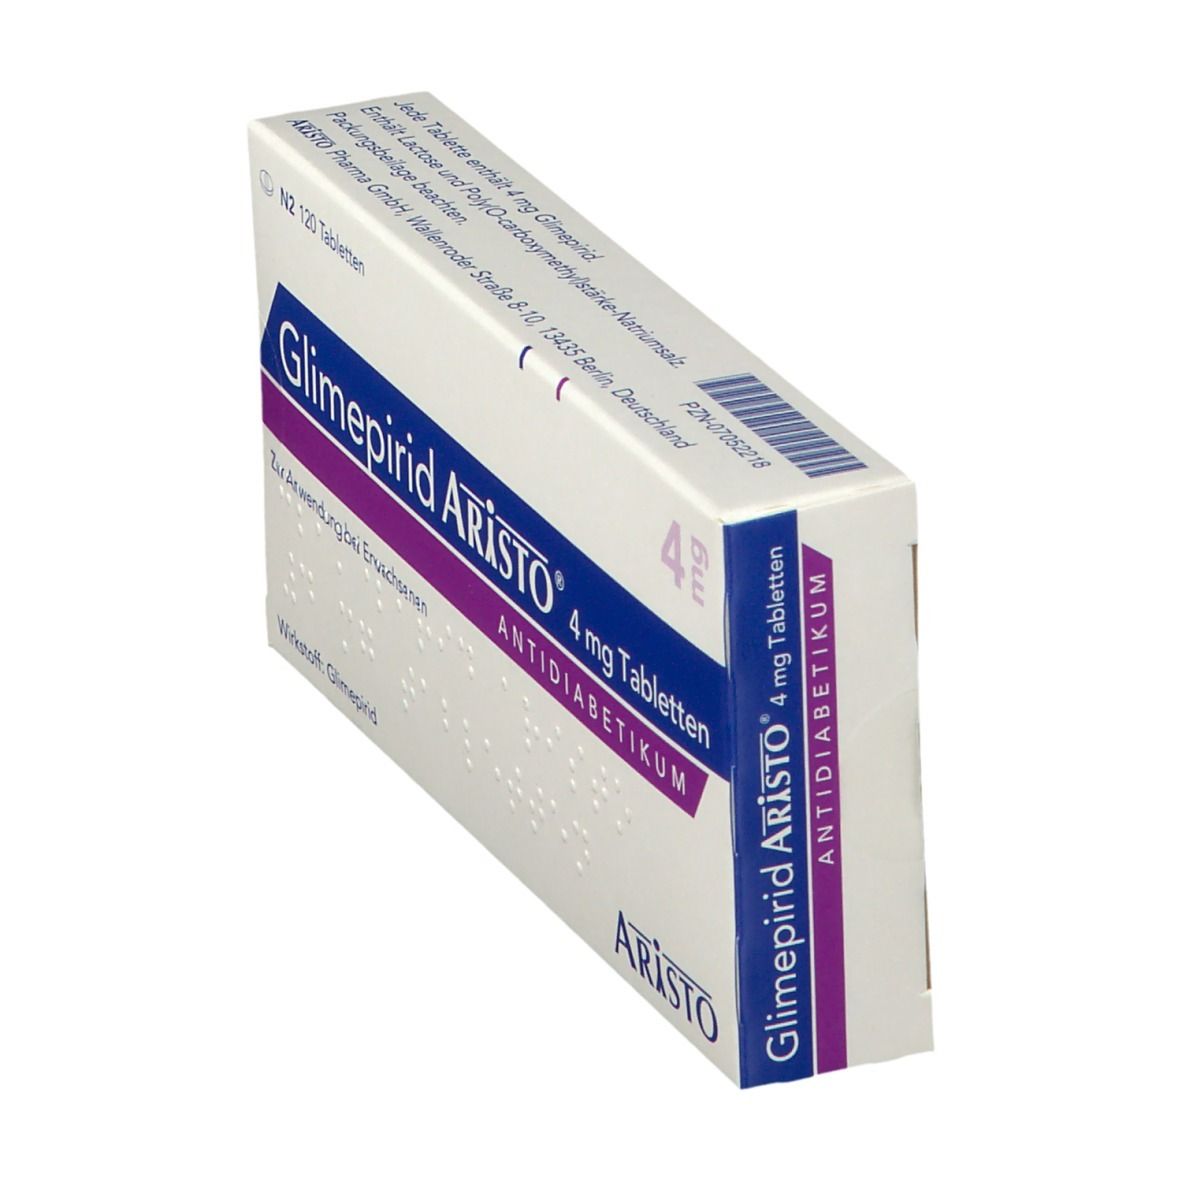 Glimepirid Aristo® 4 mg